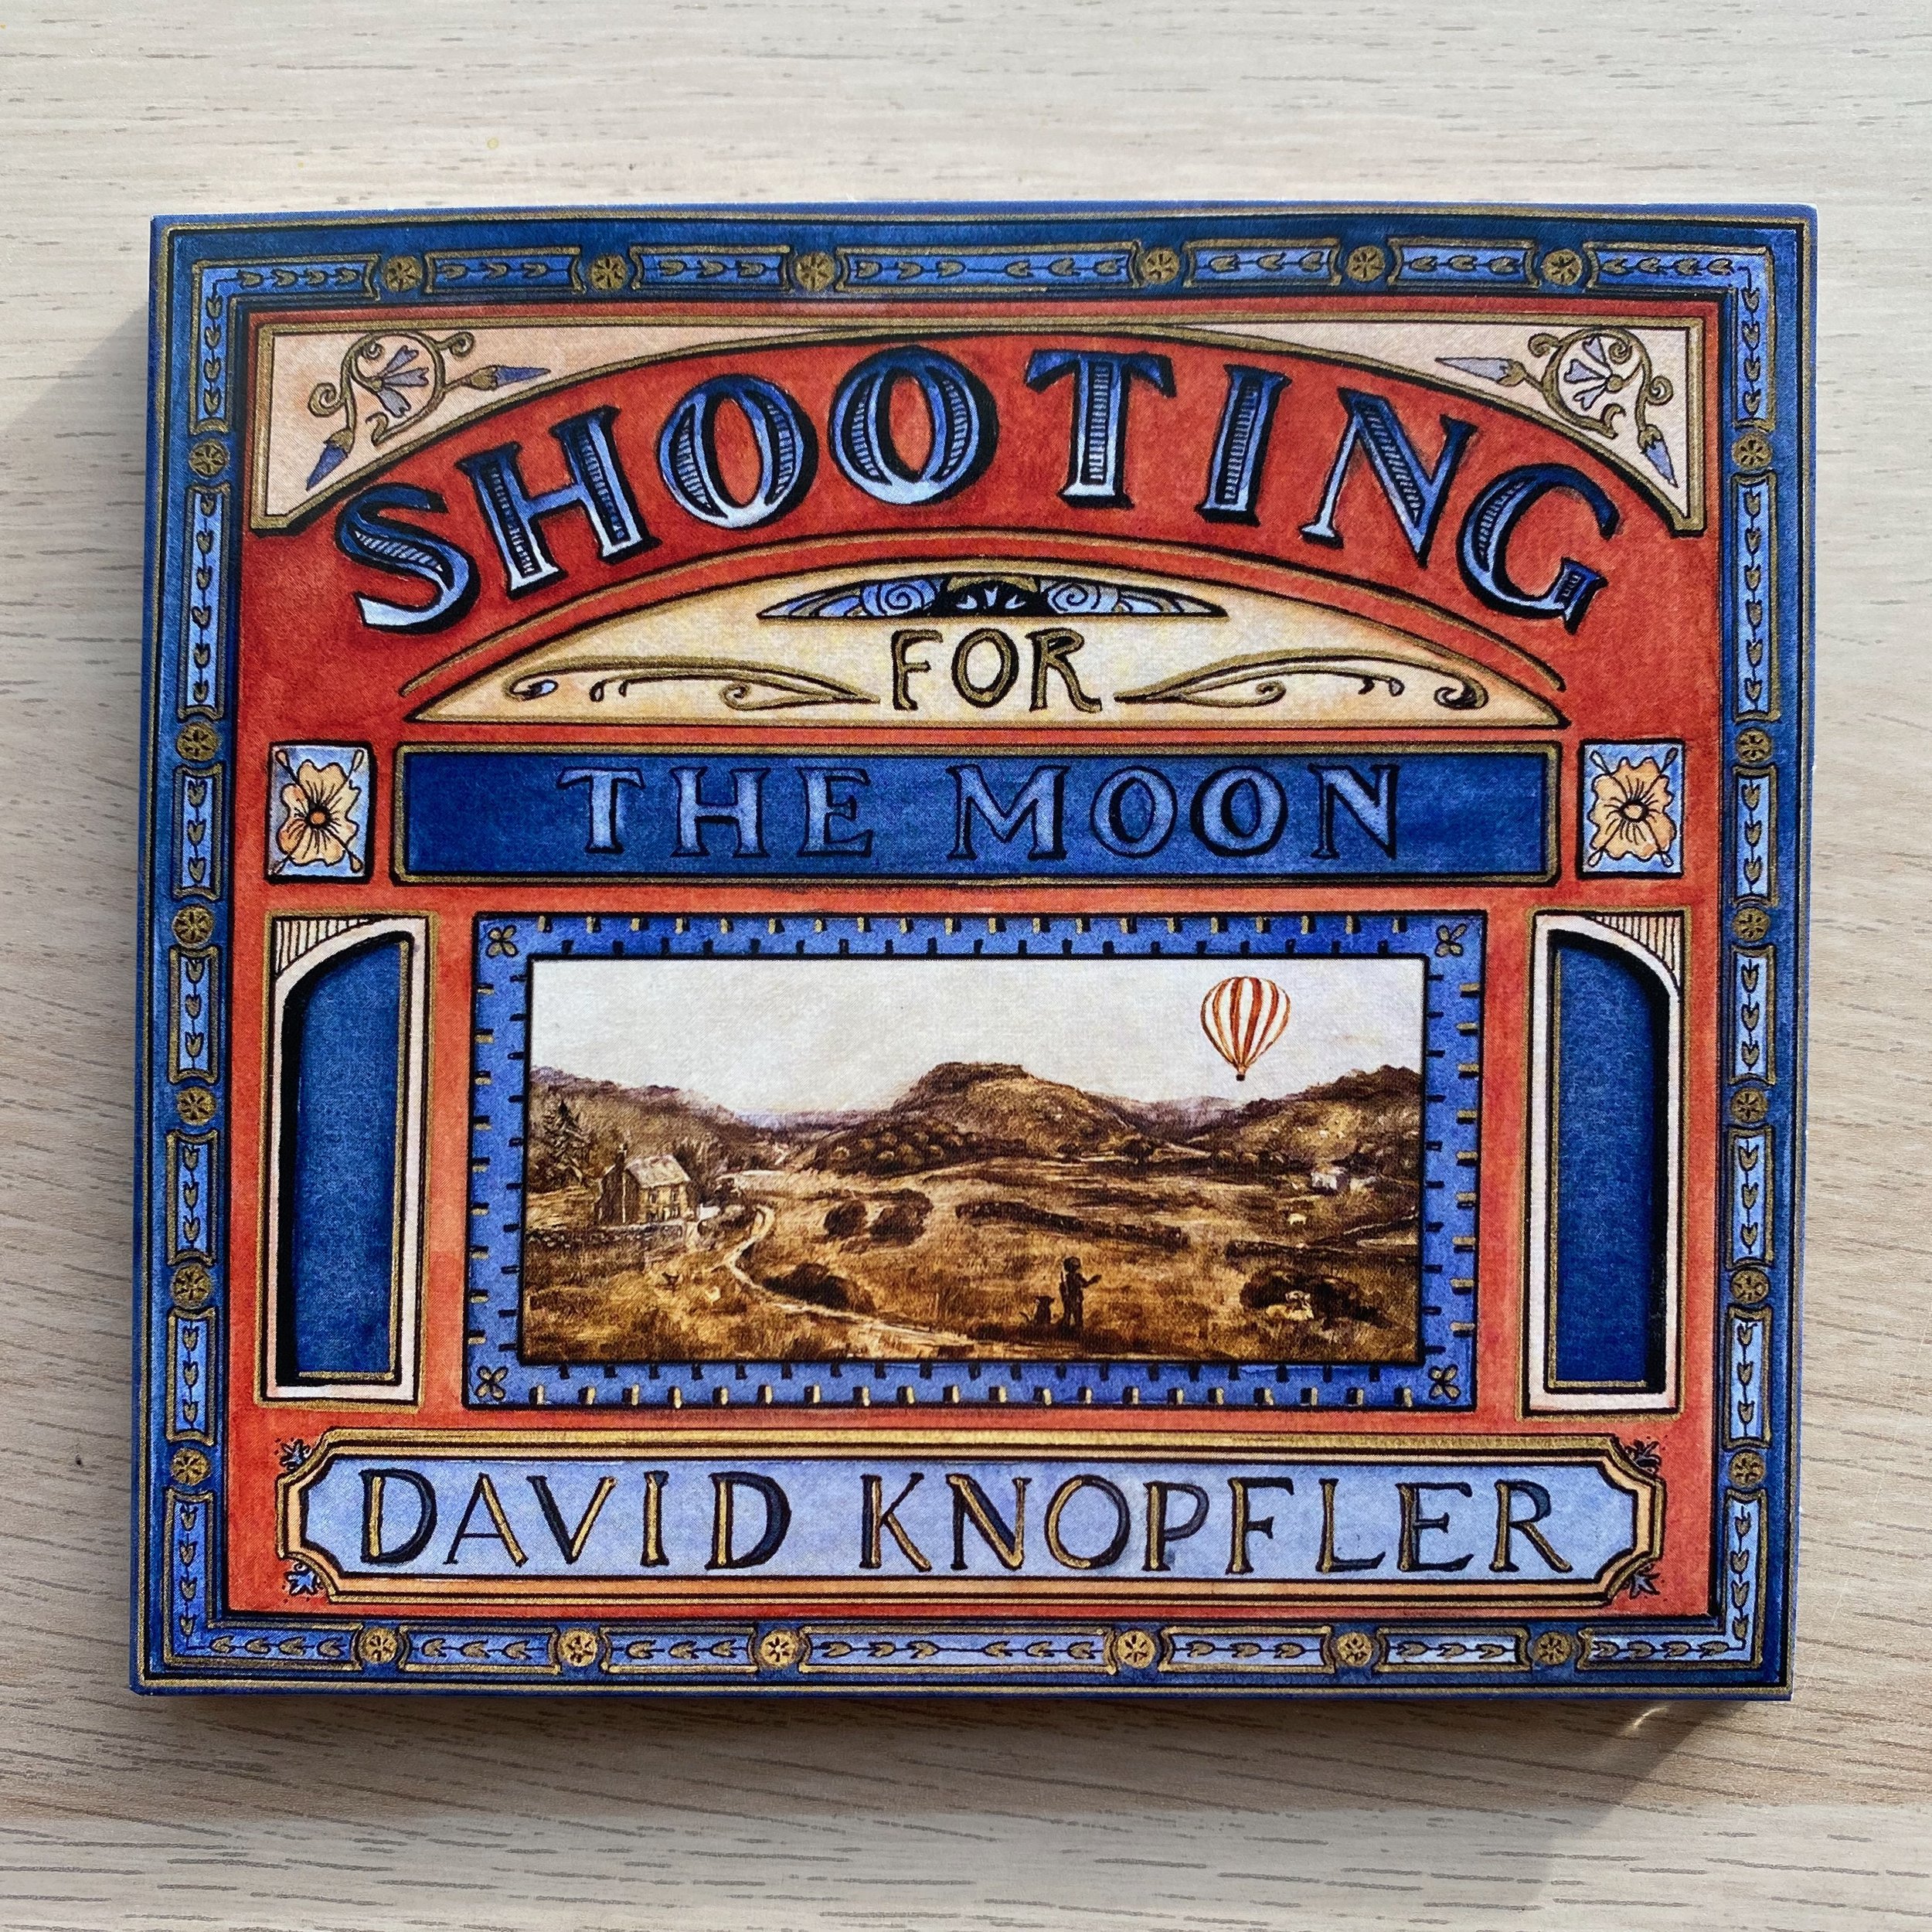 david knopfler shooting for the moon